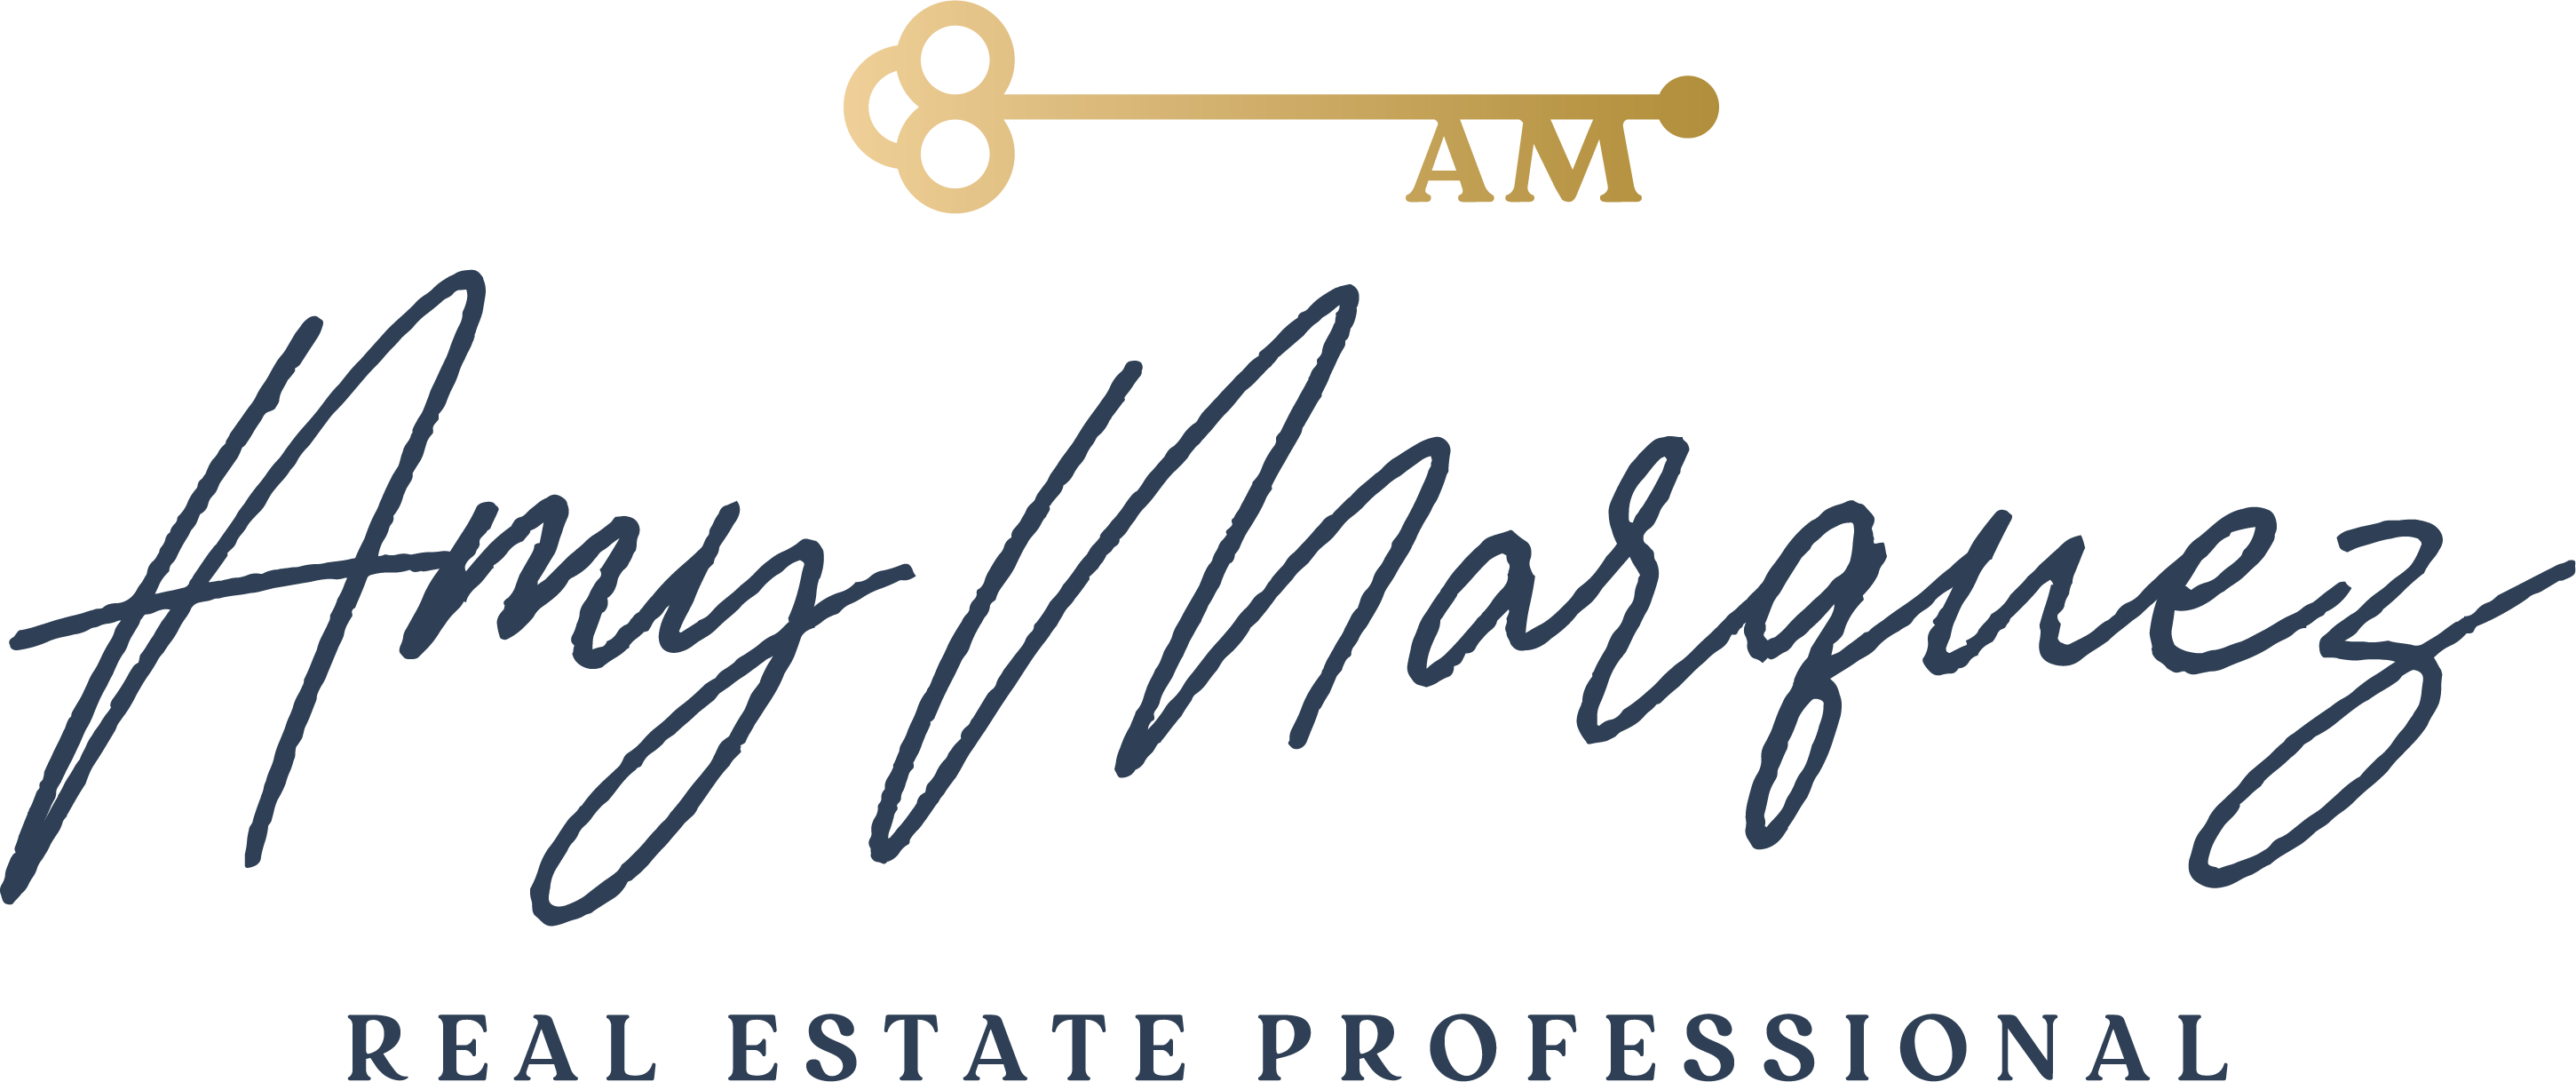 Amy Marquez Logo